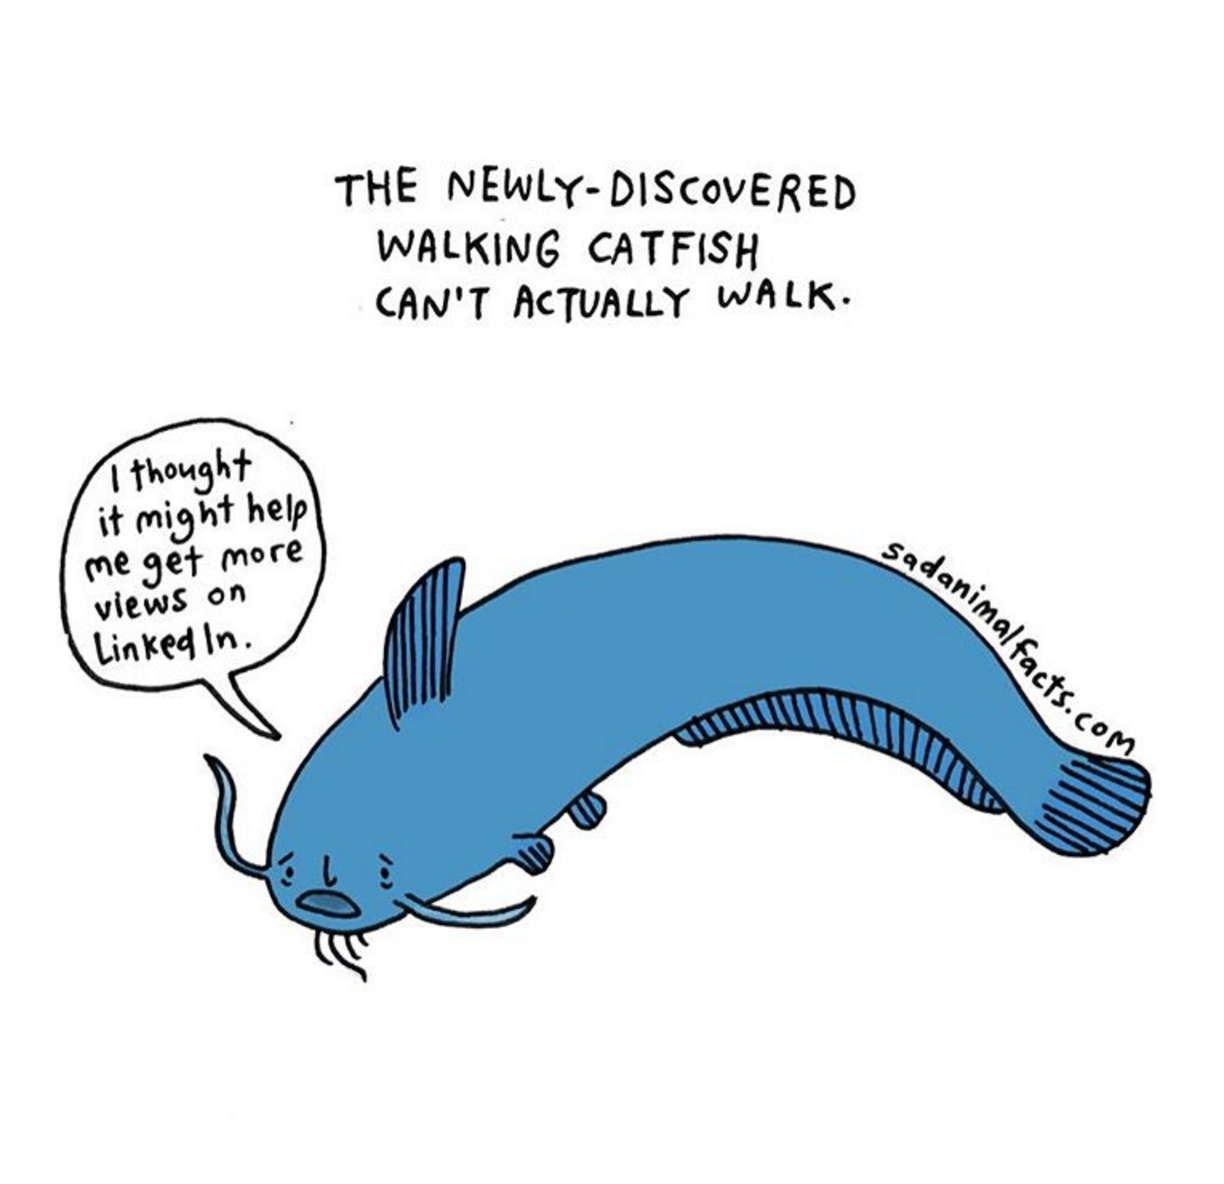 sadanimalfacts:" I’ve got some bad news about walking catfish. 